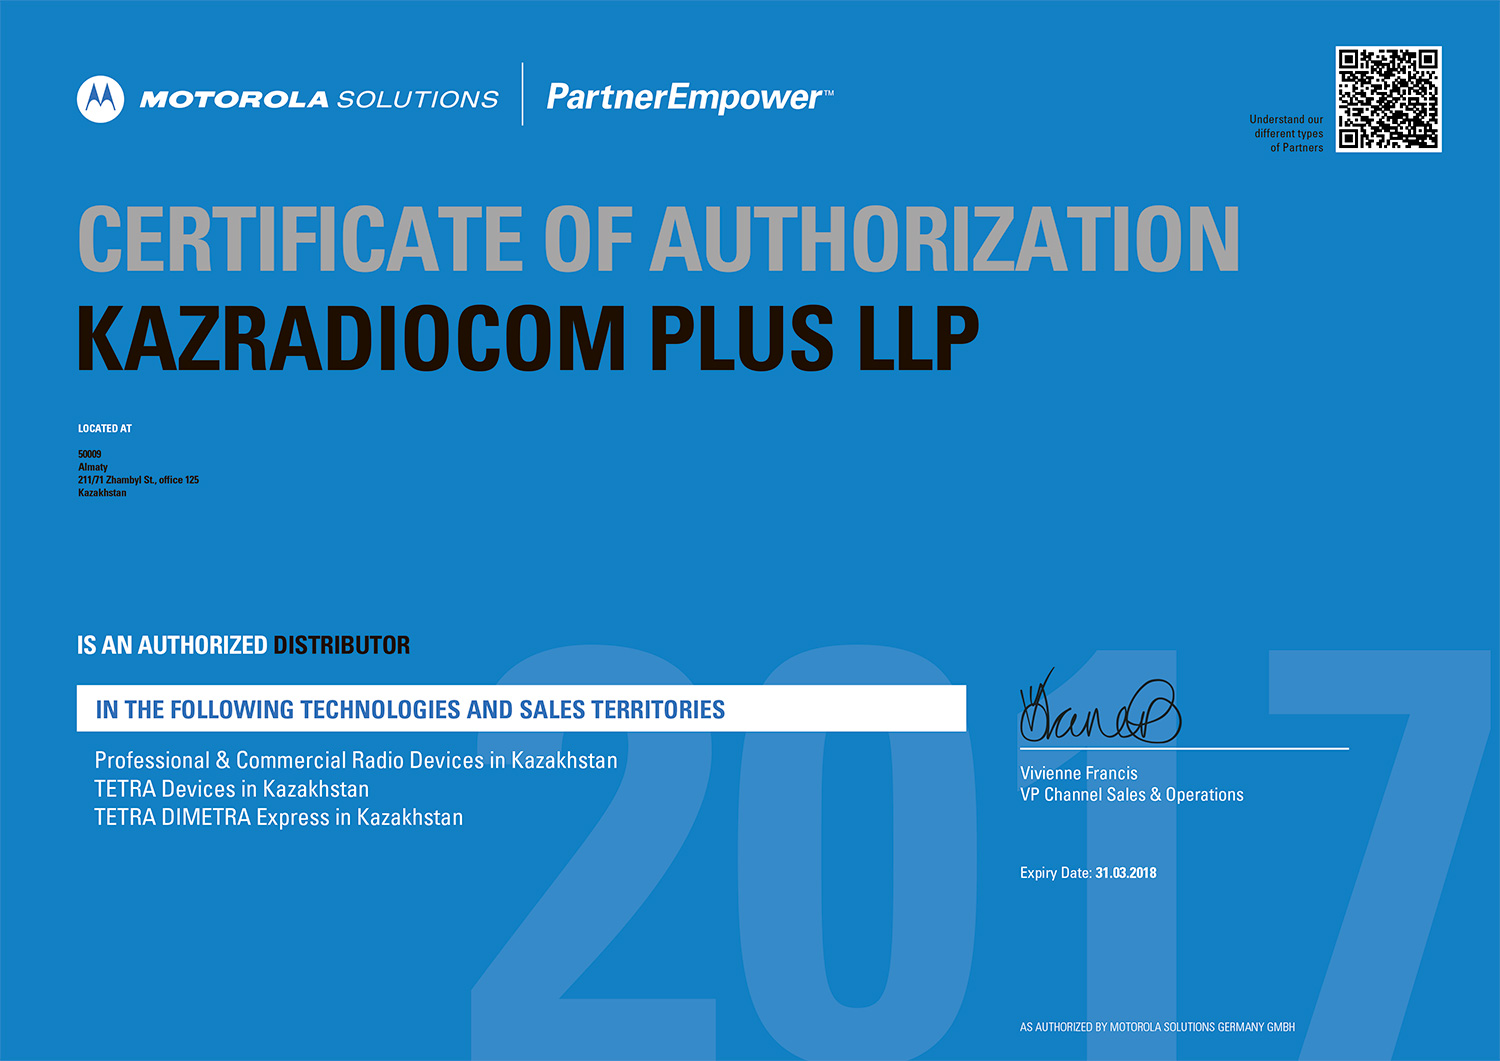 Kazradiocom Plus LLP 2017